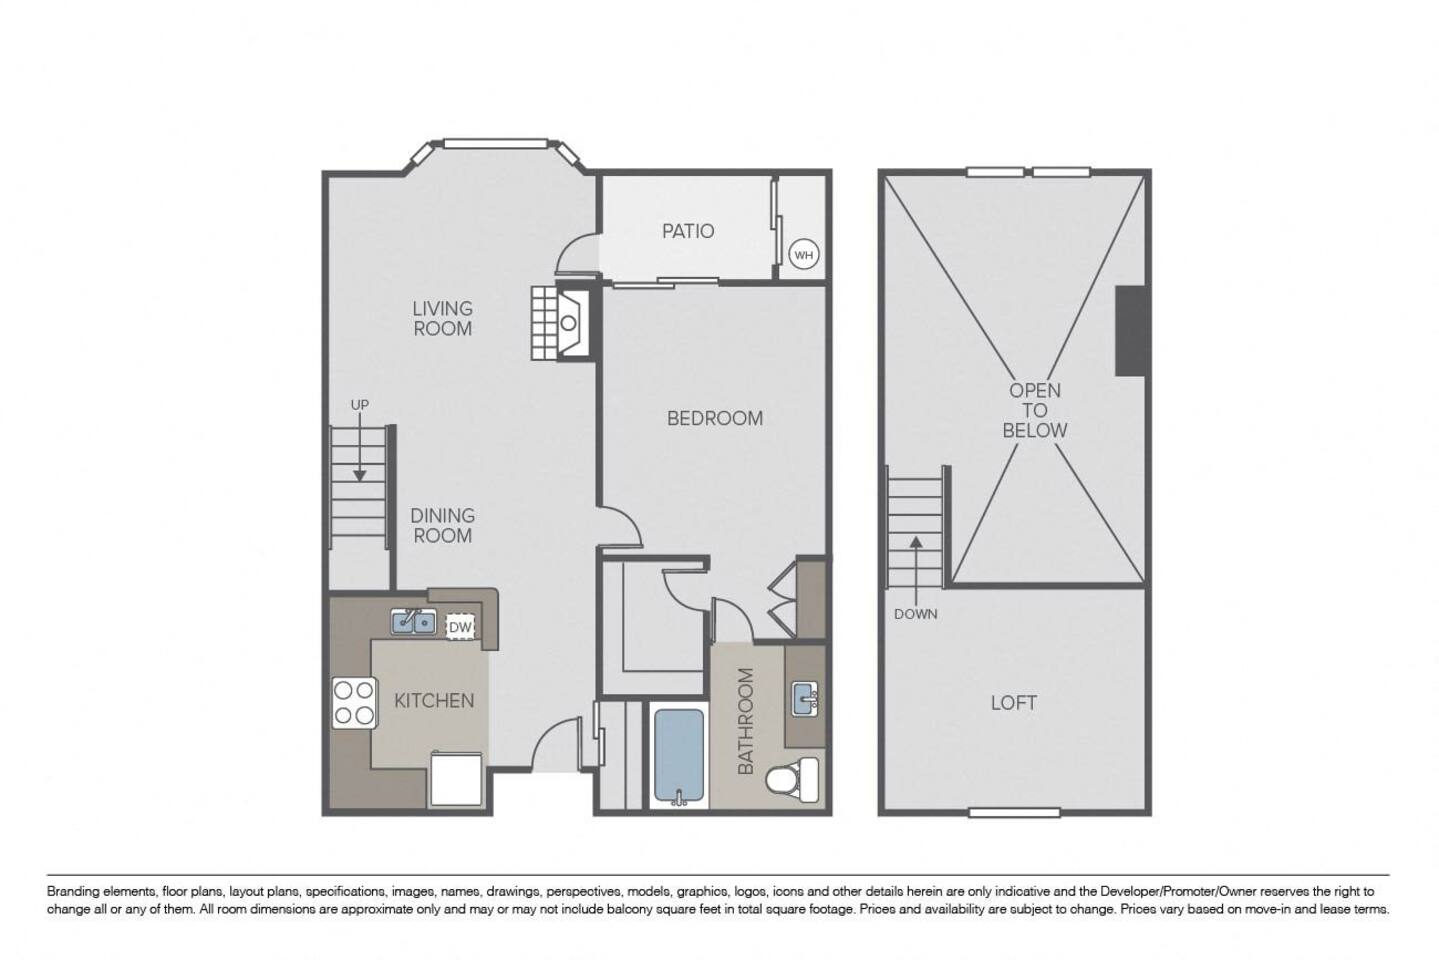 Floorplan diagram for Bellini Loft, showing 1 bedroom